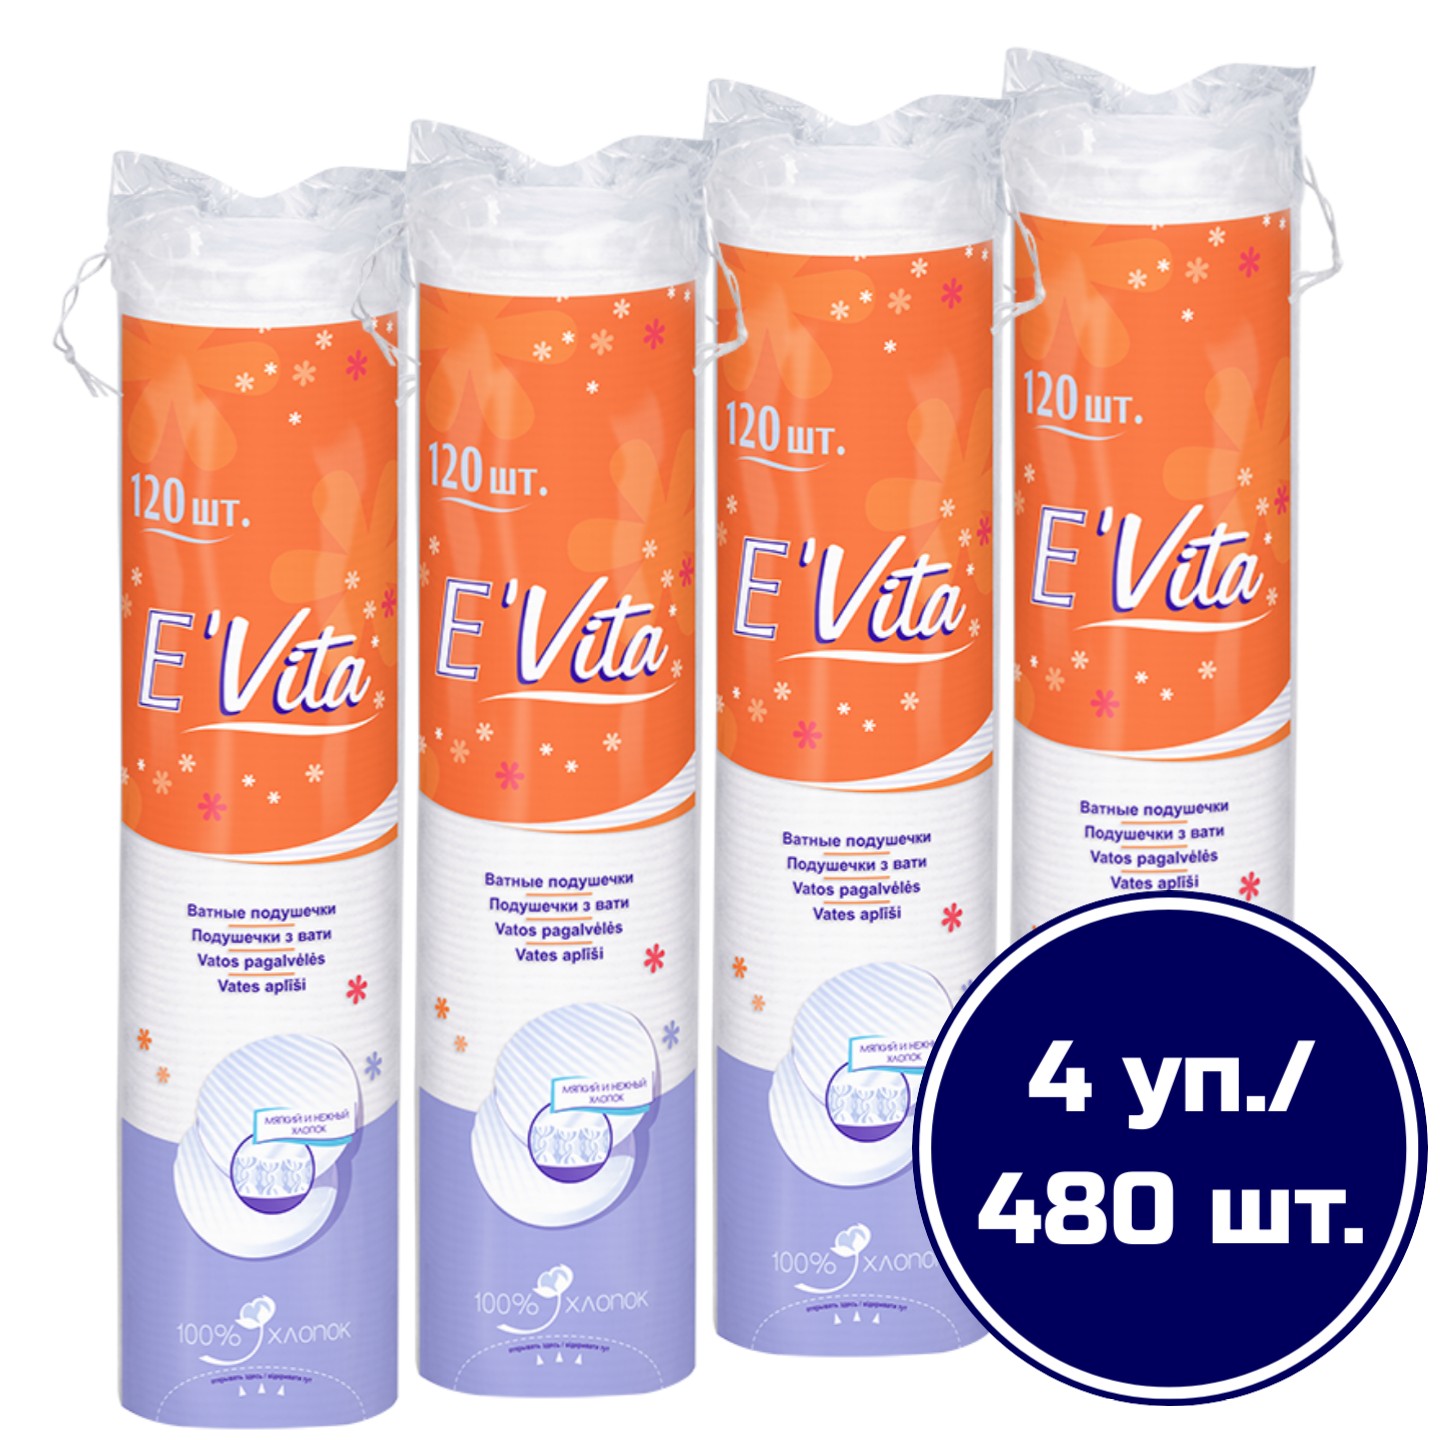 Ватные диски E'Vita, 120 шт х 4 упаковки ватные палочки premial classic 100шт пакет 4 упаковки